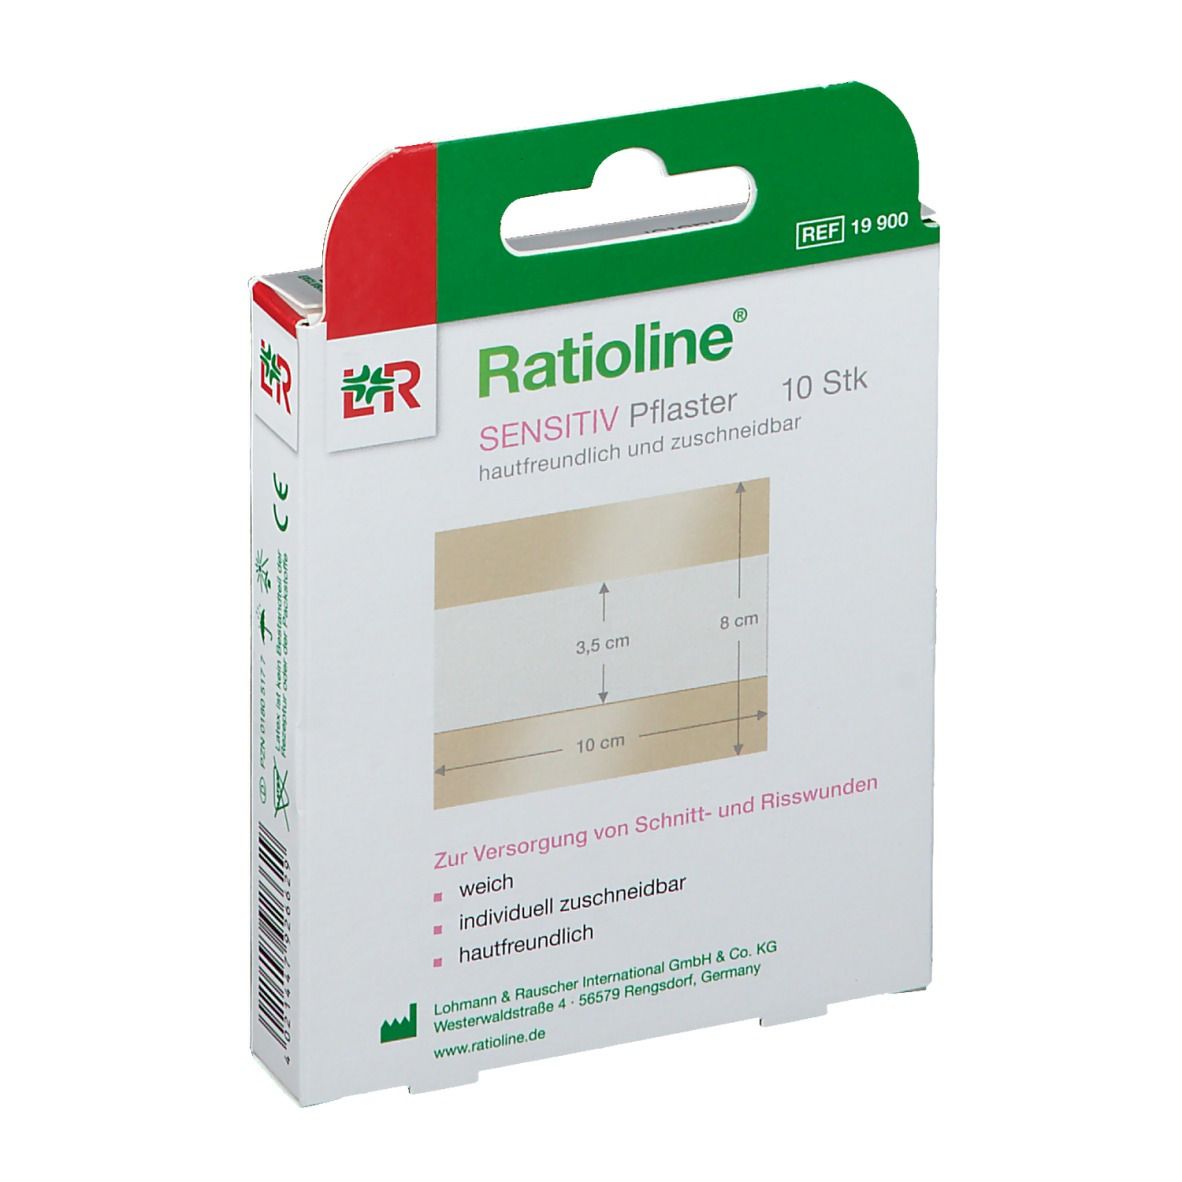 Ratioline® Sensitive Wundschnellverband 8 cm x 10 cm